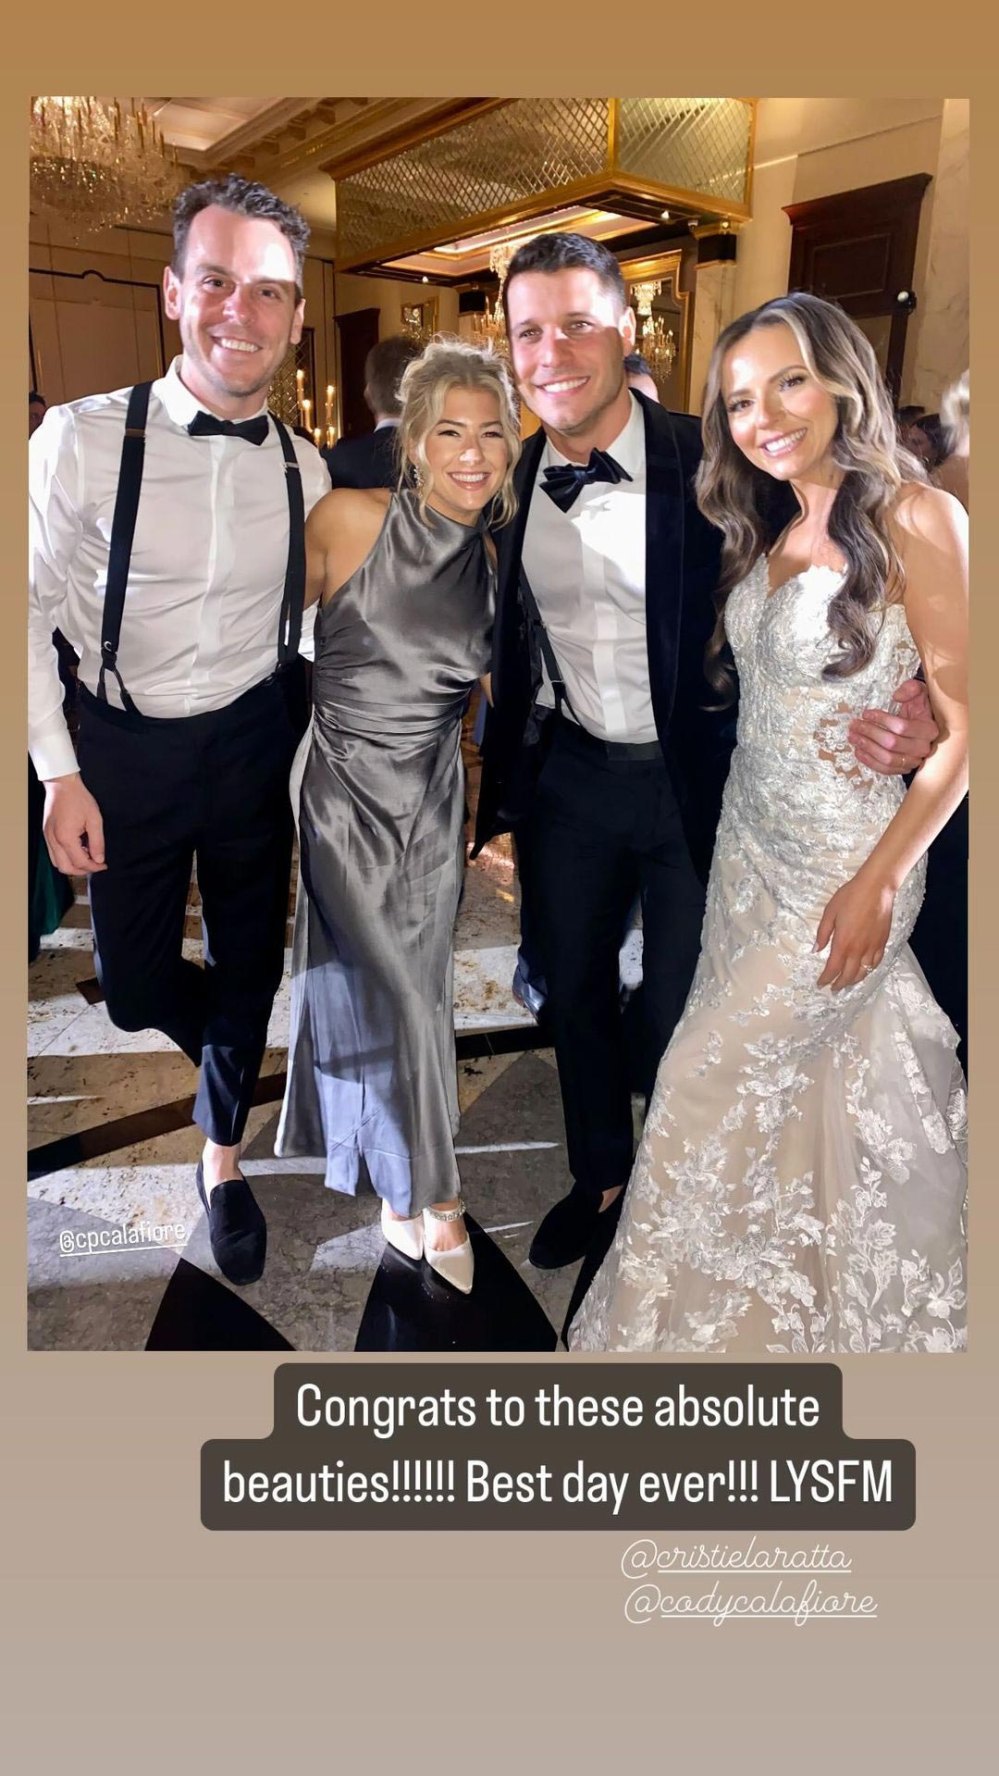 Big Brother Winner Cody Calafiore Marries Fiancee Cristie Laratta in Perfect Ceremony